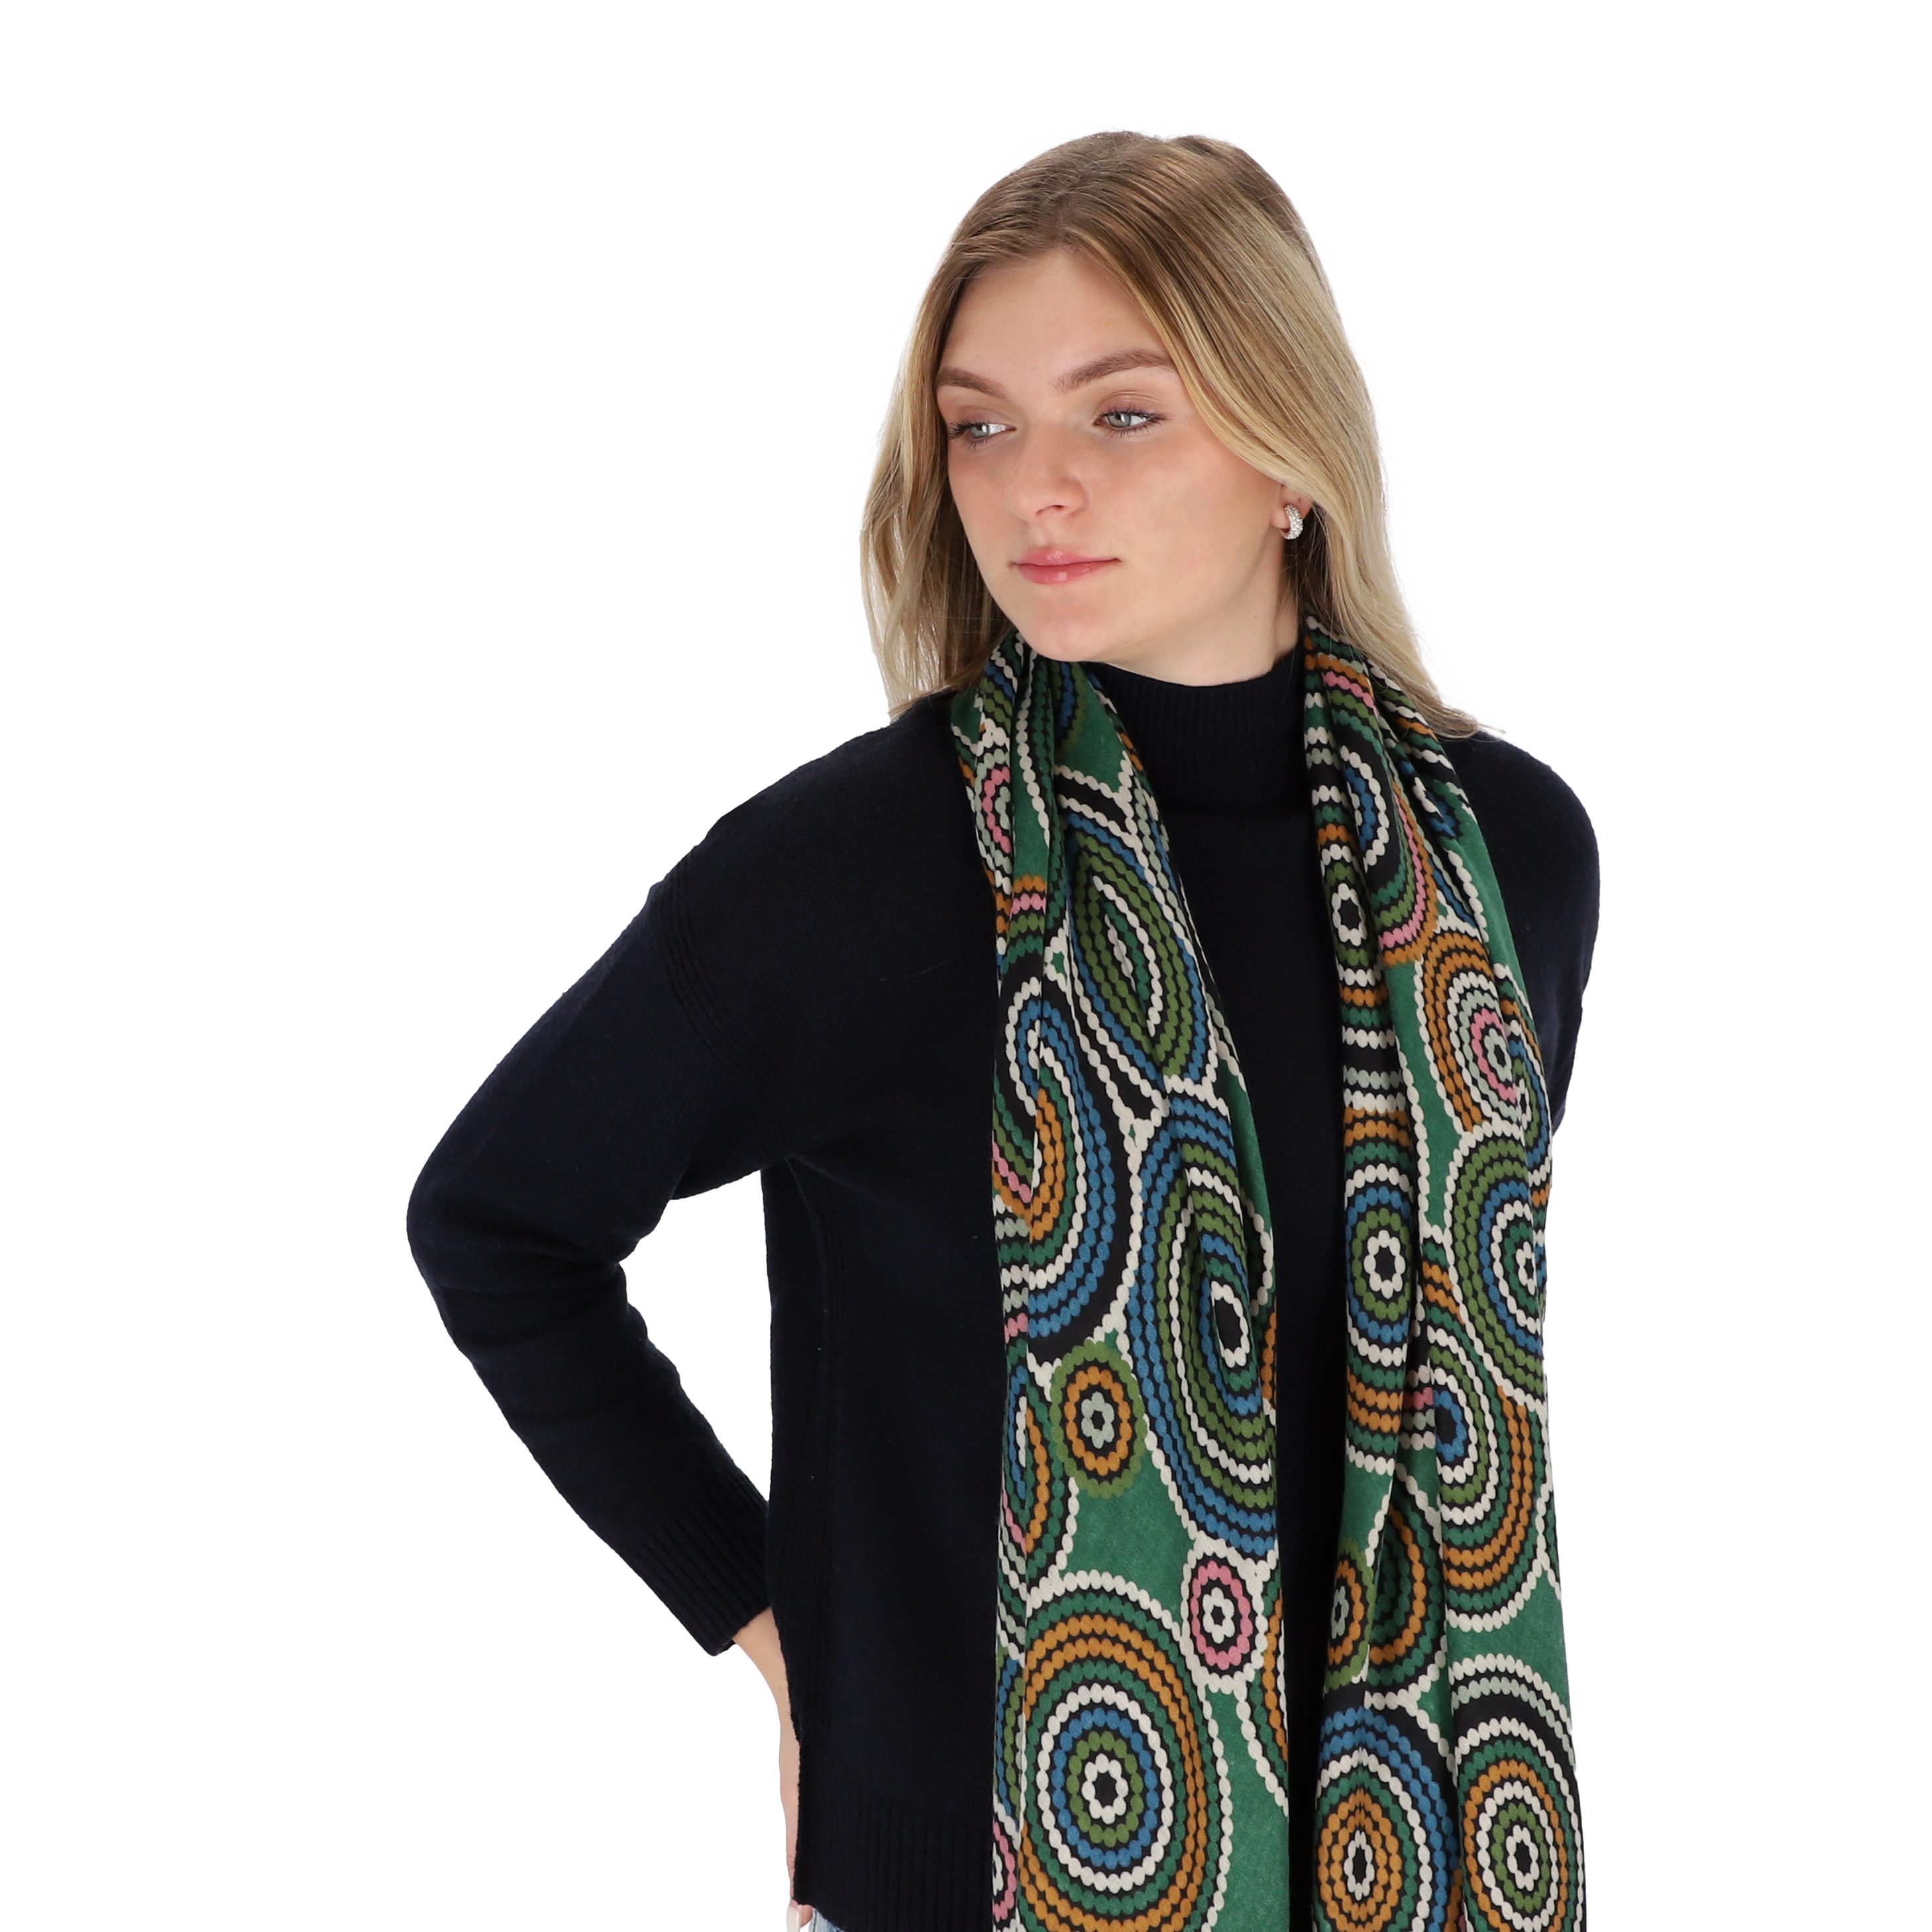 halsüberkopf Accessoires Modeschal Schal tollen Mandala, grün Farben! in